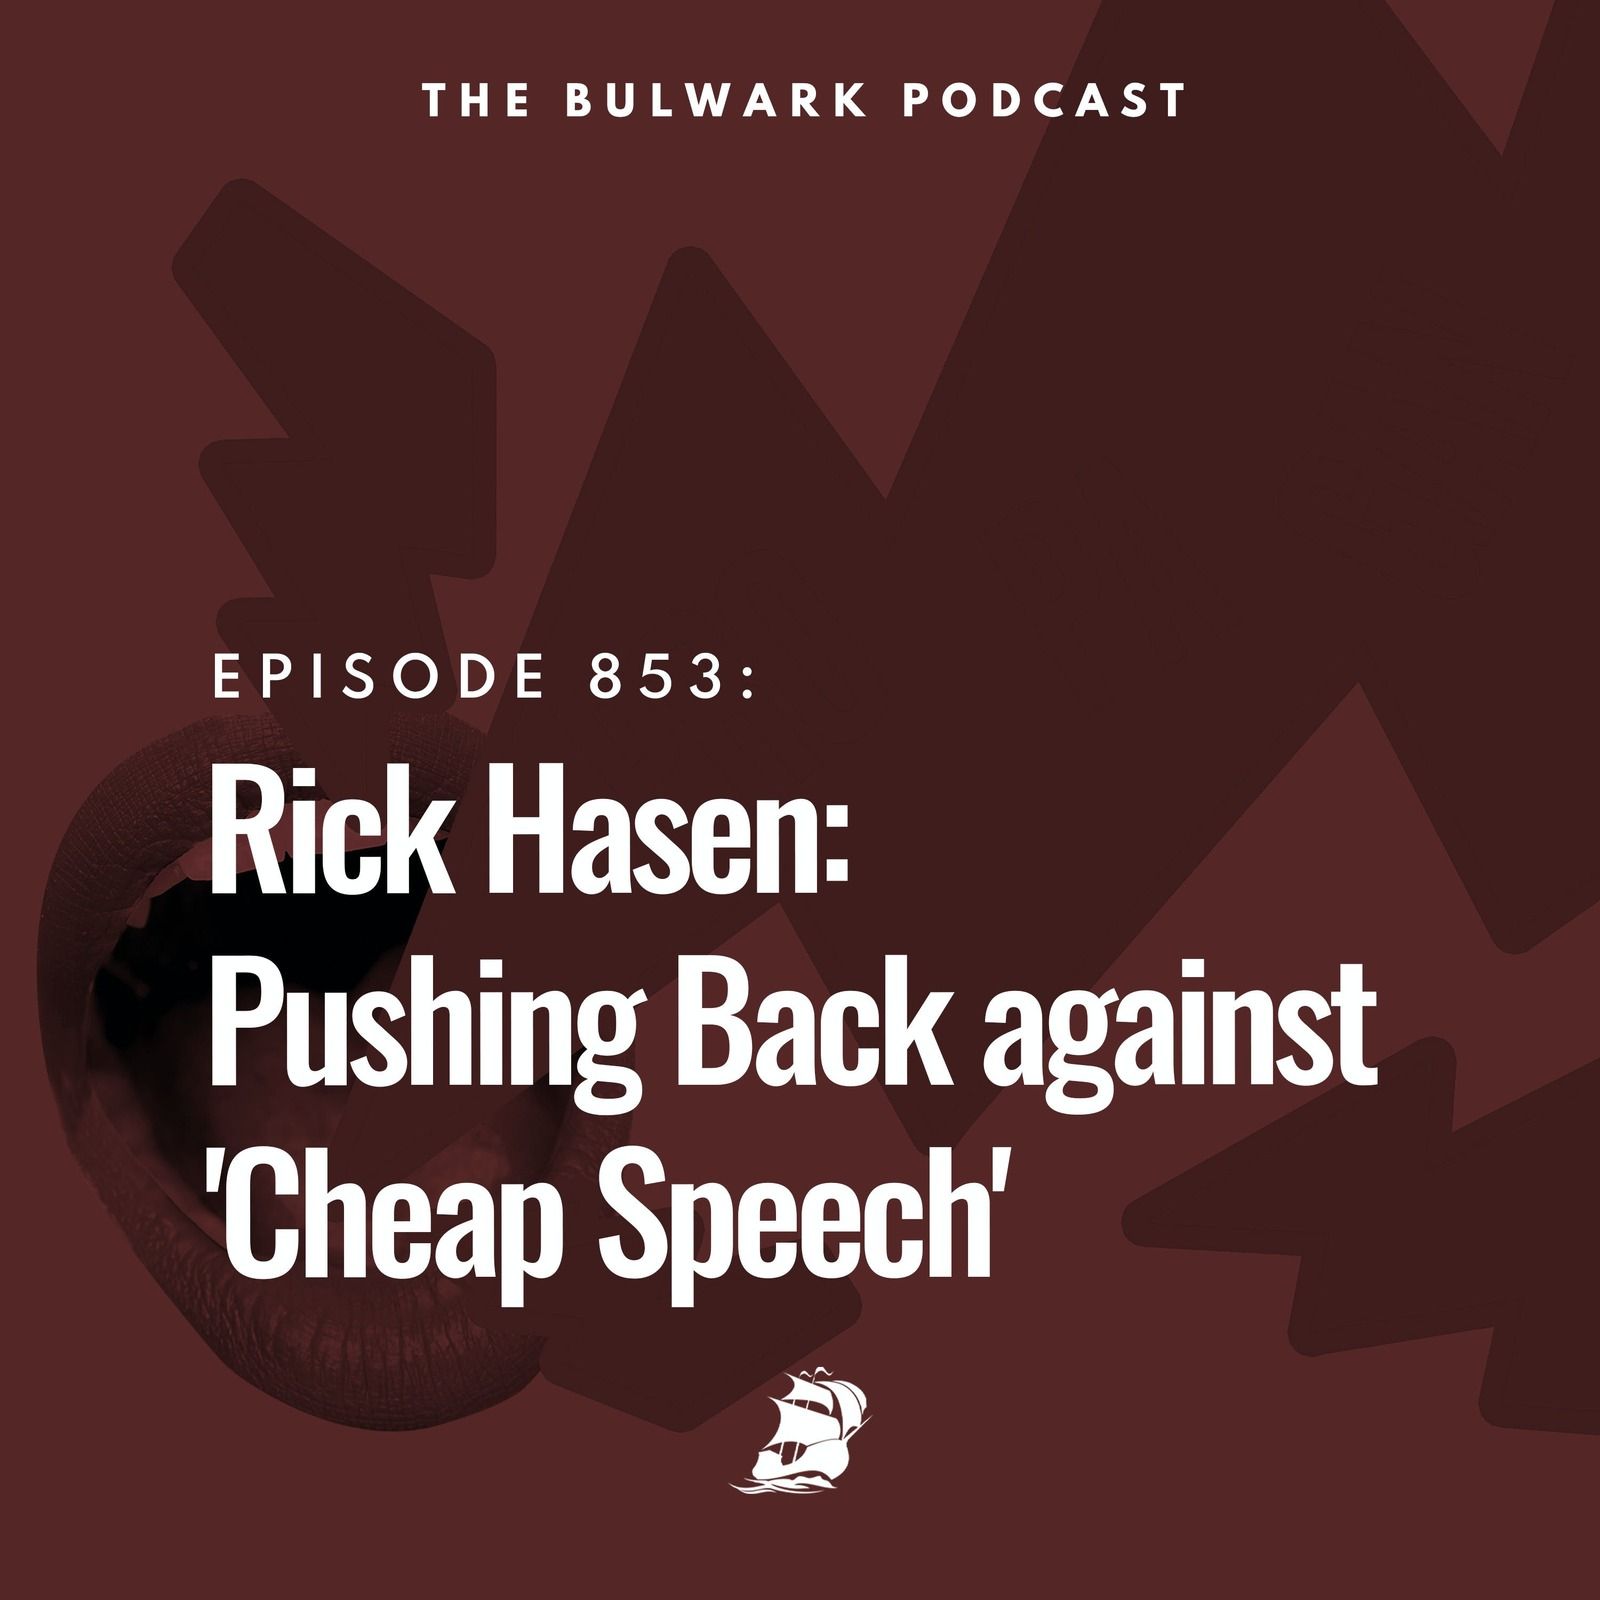 Rick Hasen: Pushing Back against 'Cheap Speech'